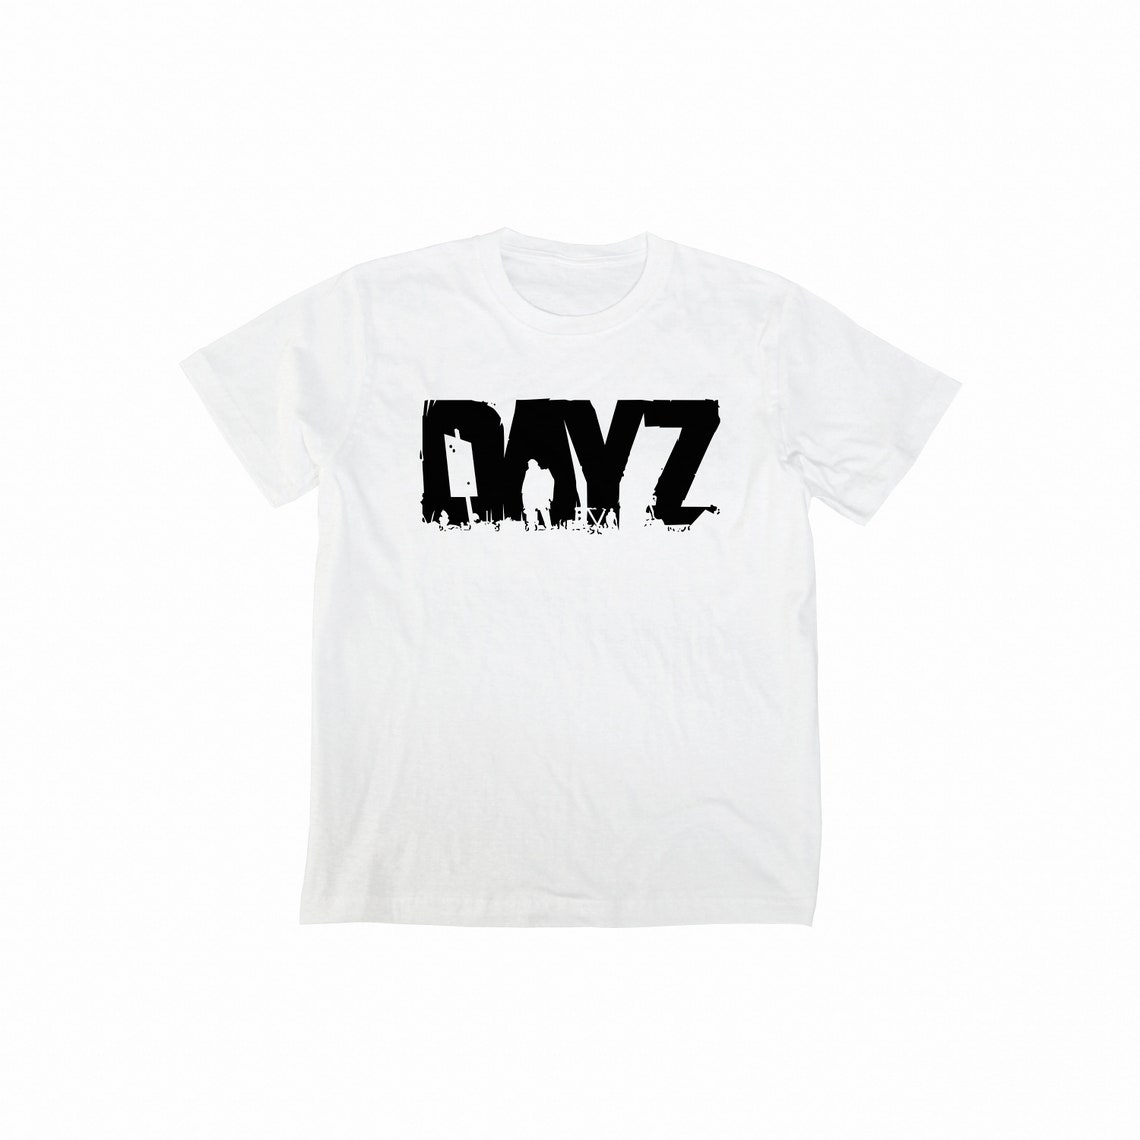 Dayz tshirt gamming shirt geek t-shirt dayz game console | Etsy